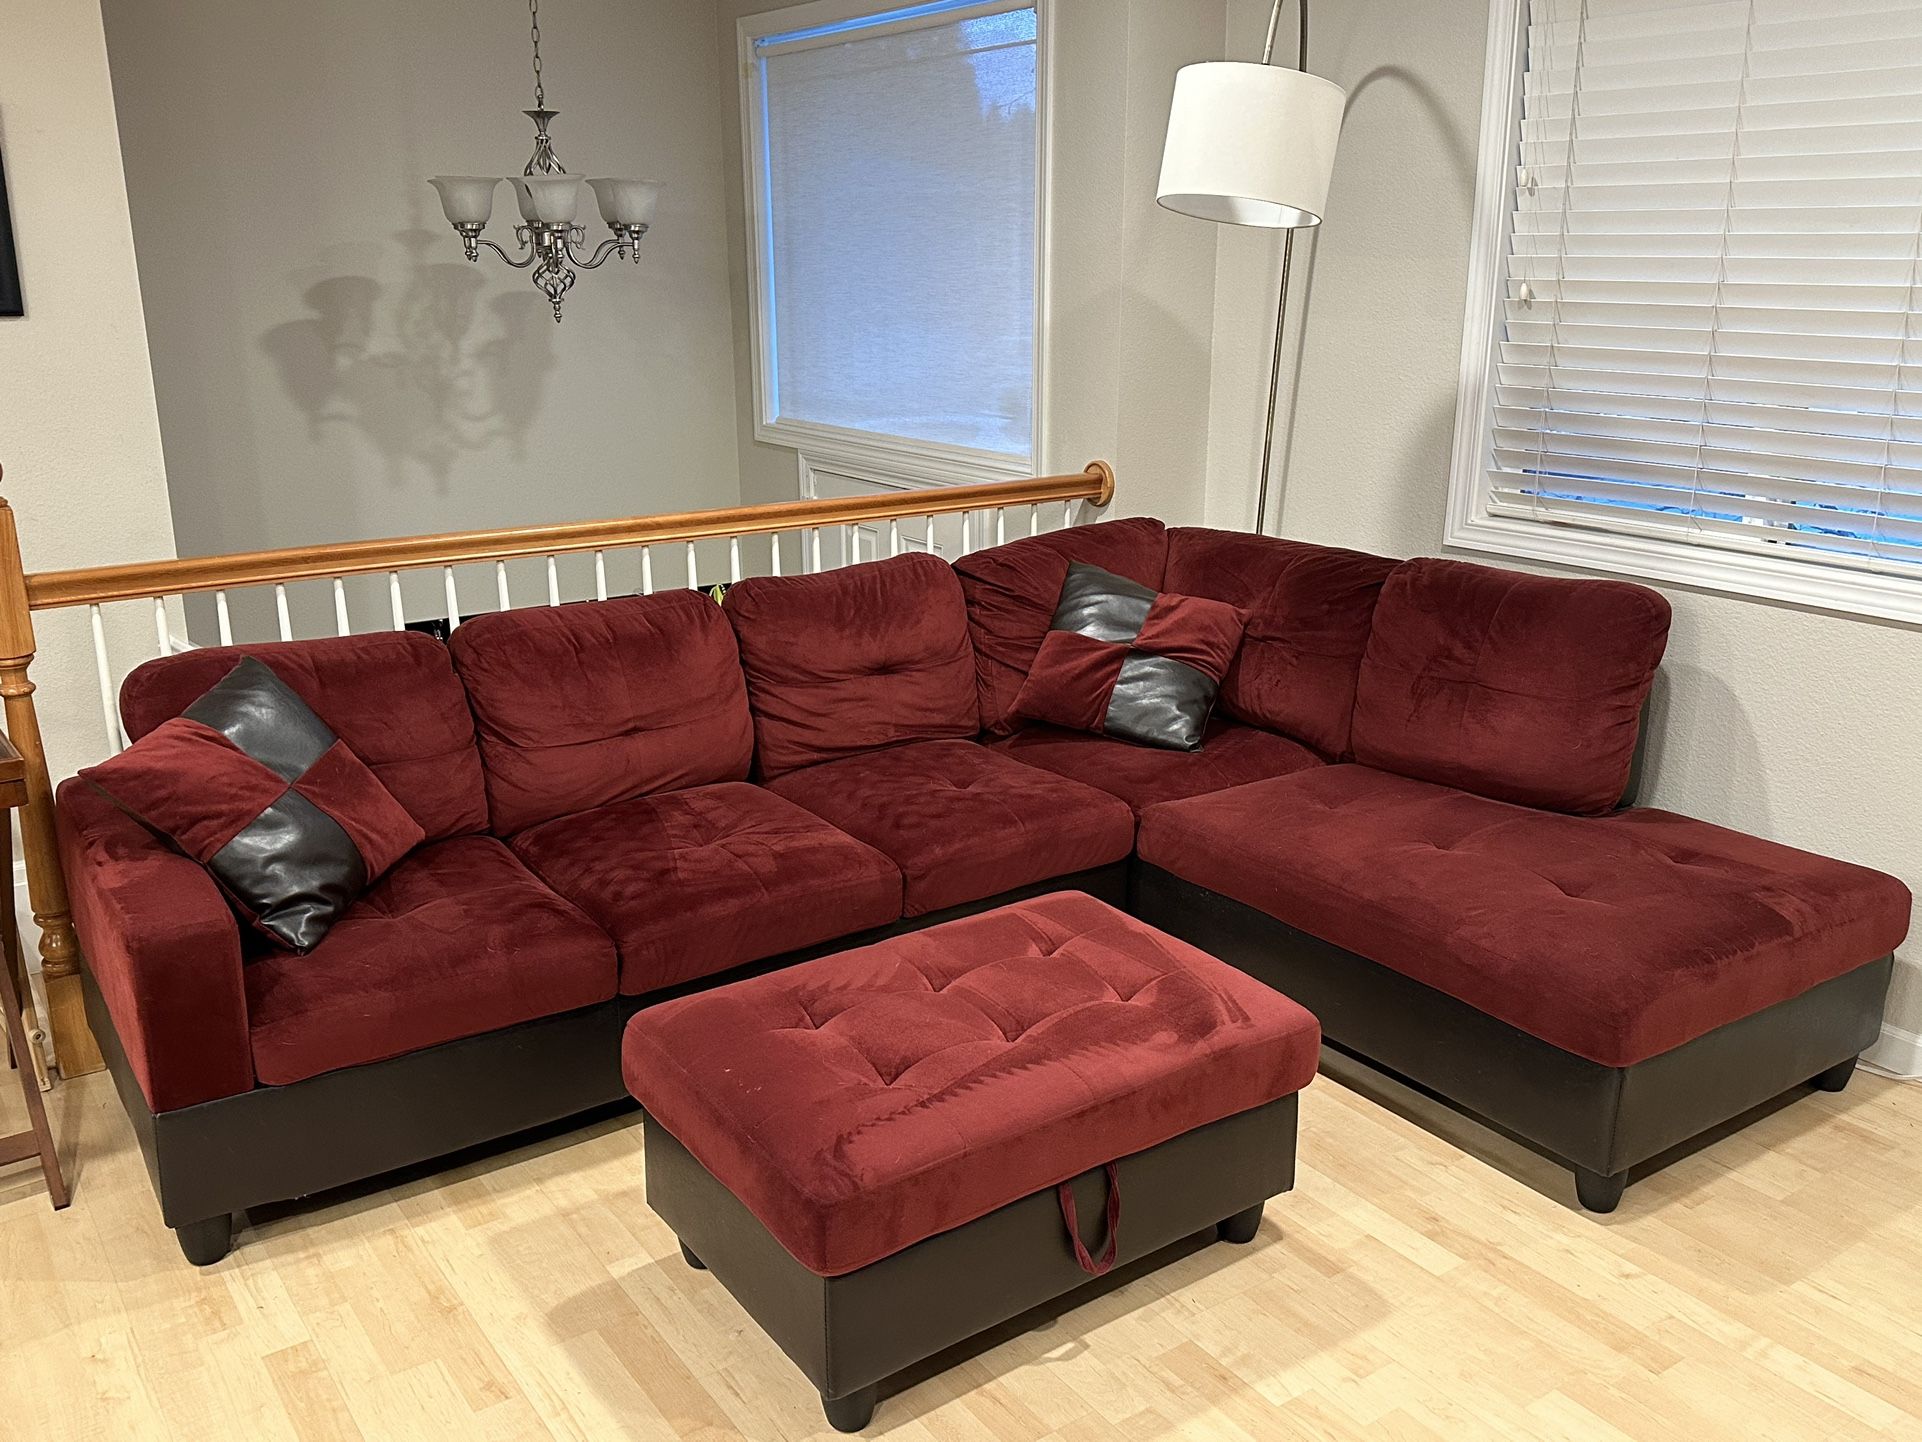 Large L Sofa With Ottoman Storage